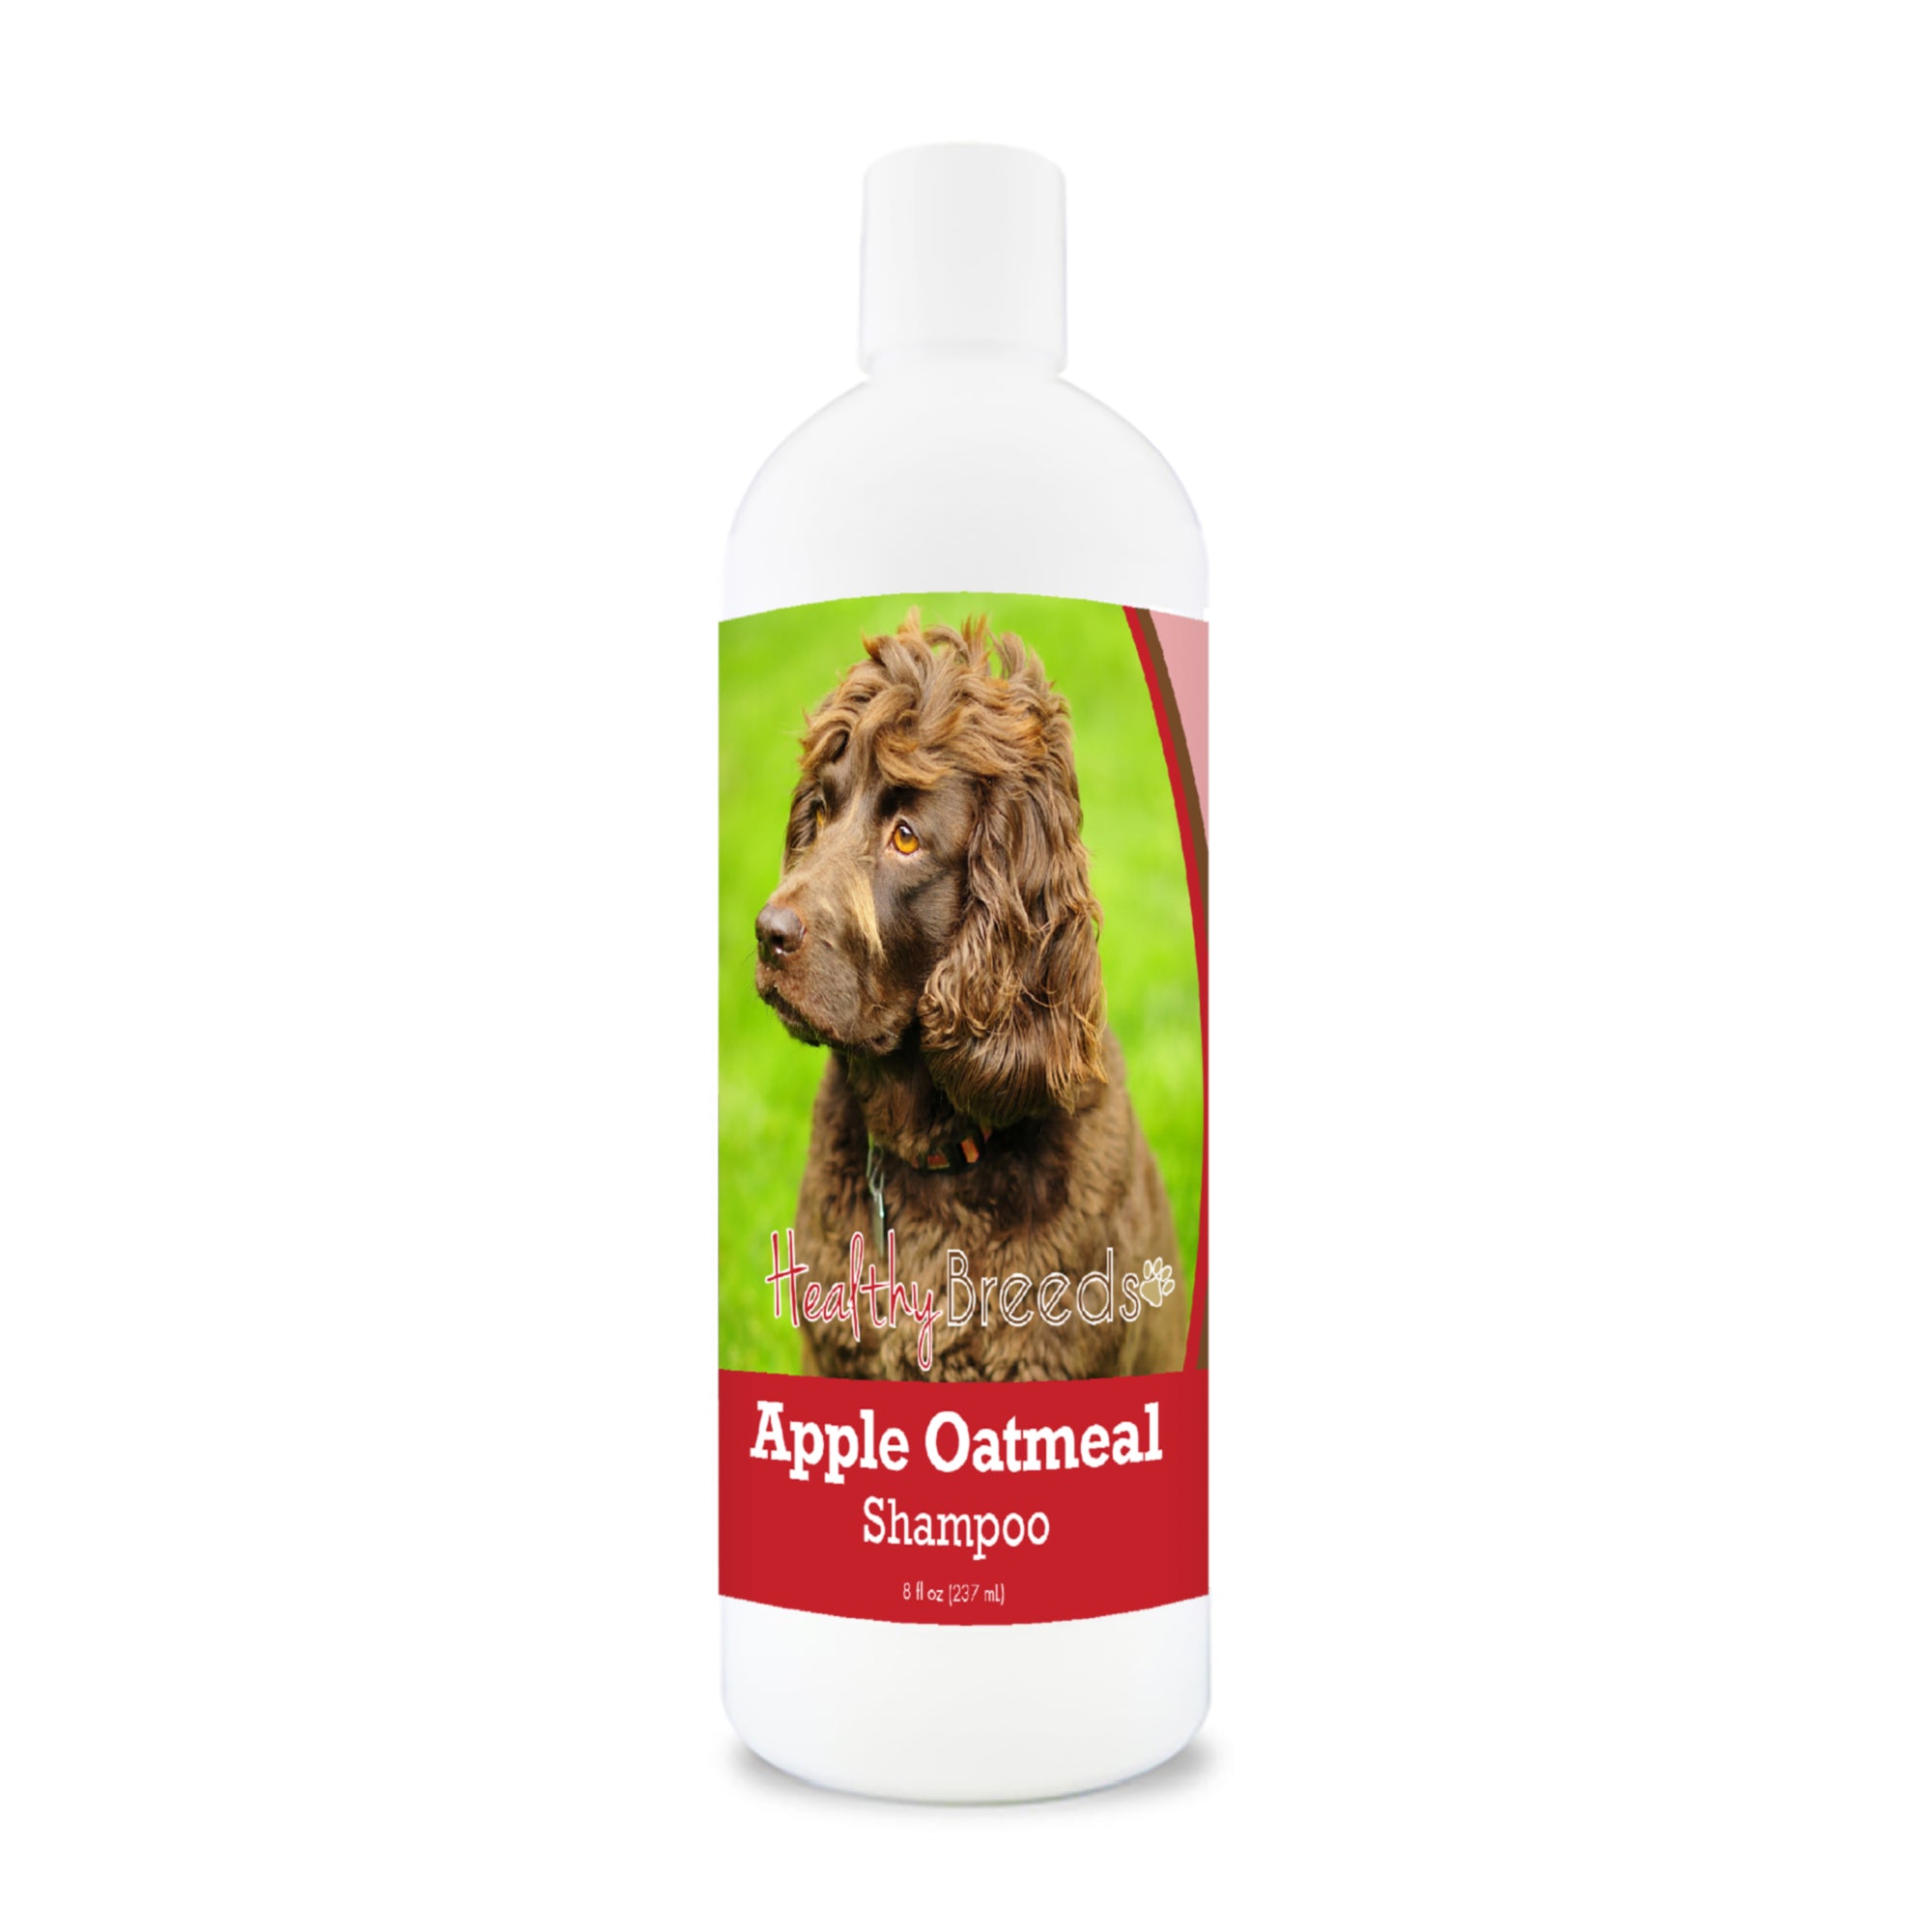 Boykin Spaniel Apple Oatmeal Shampoo 8 oz